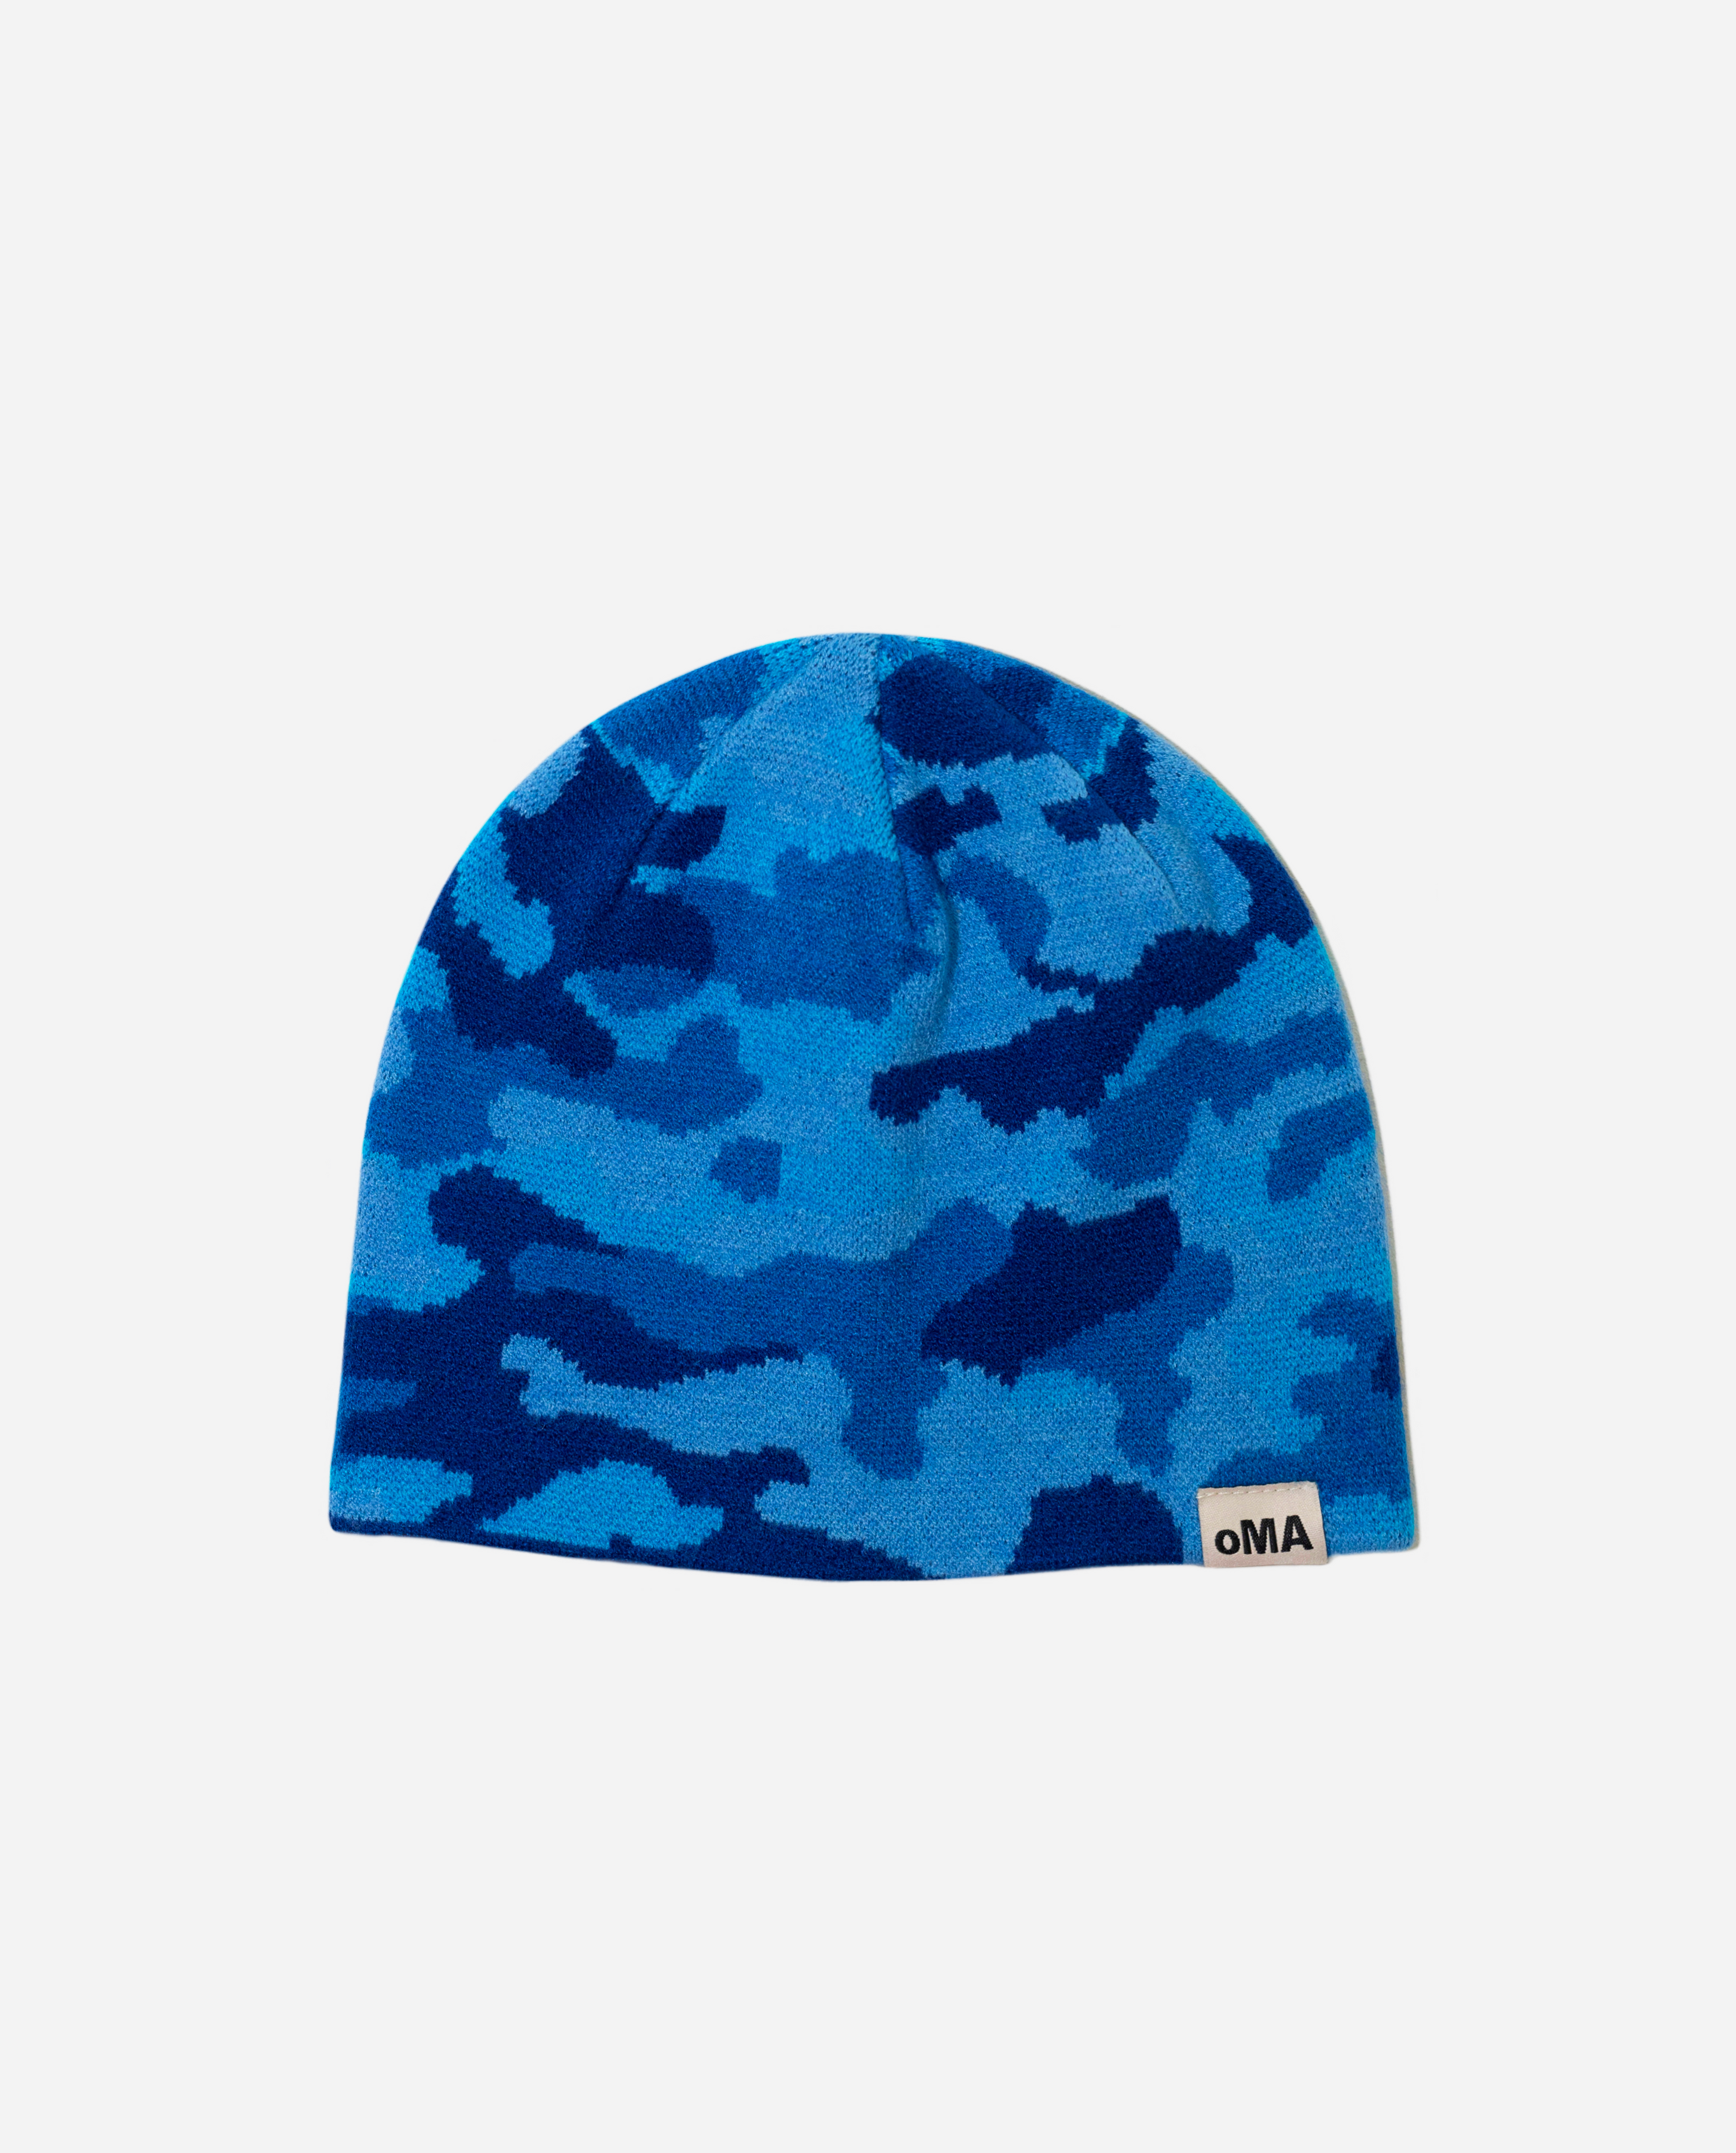 oMA CAMO SKULL CAP (BLUE)